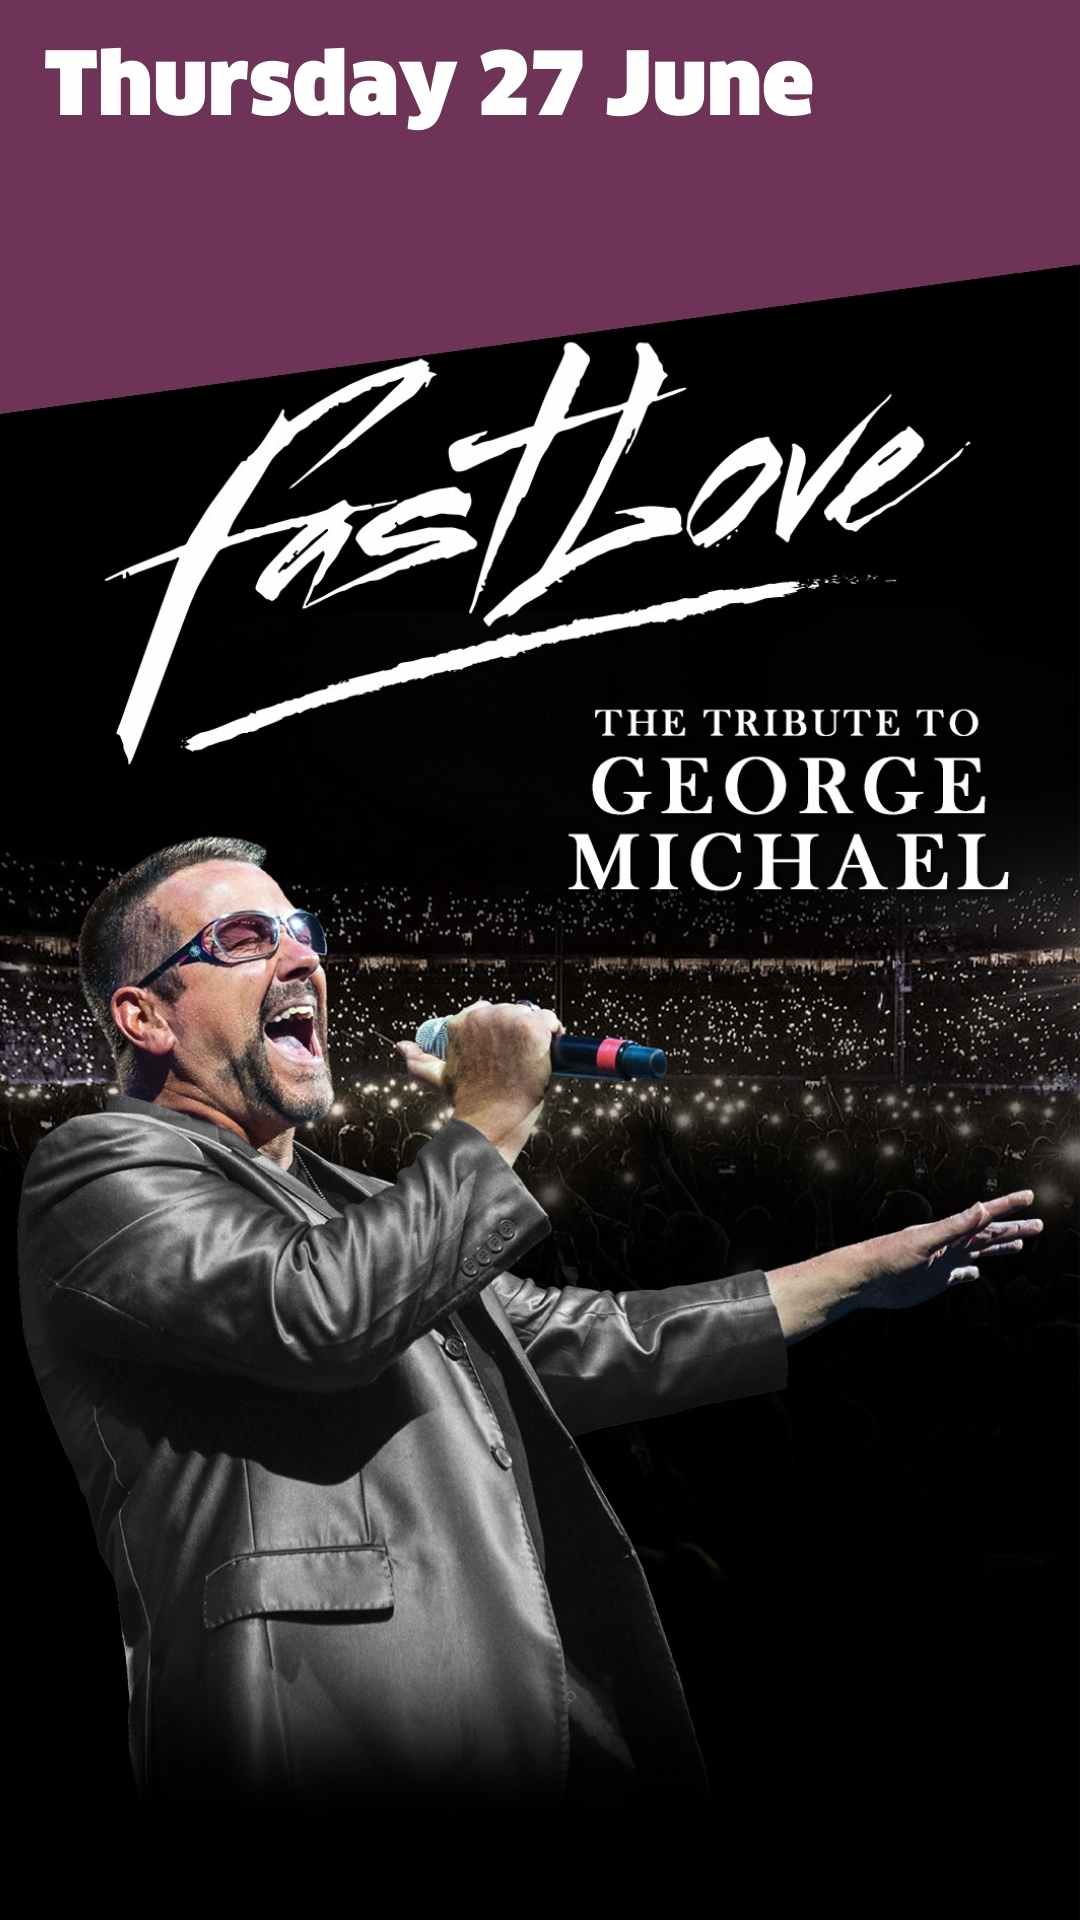 Fastlove George Michael tribute, Thursday 27 June